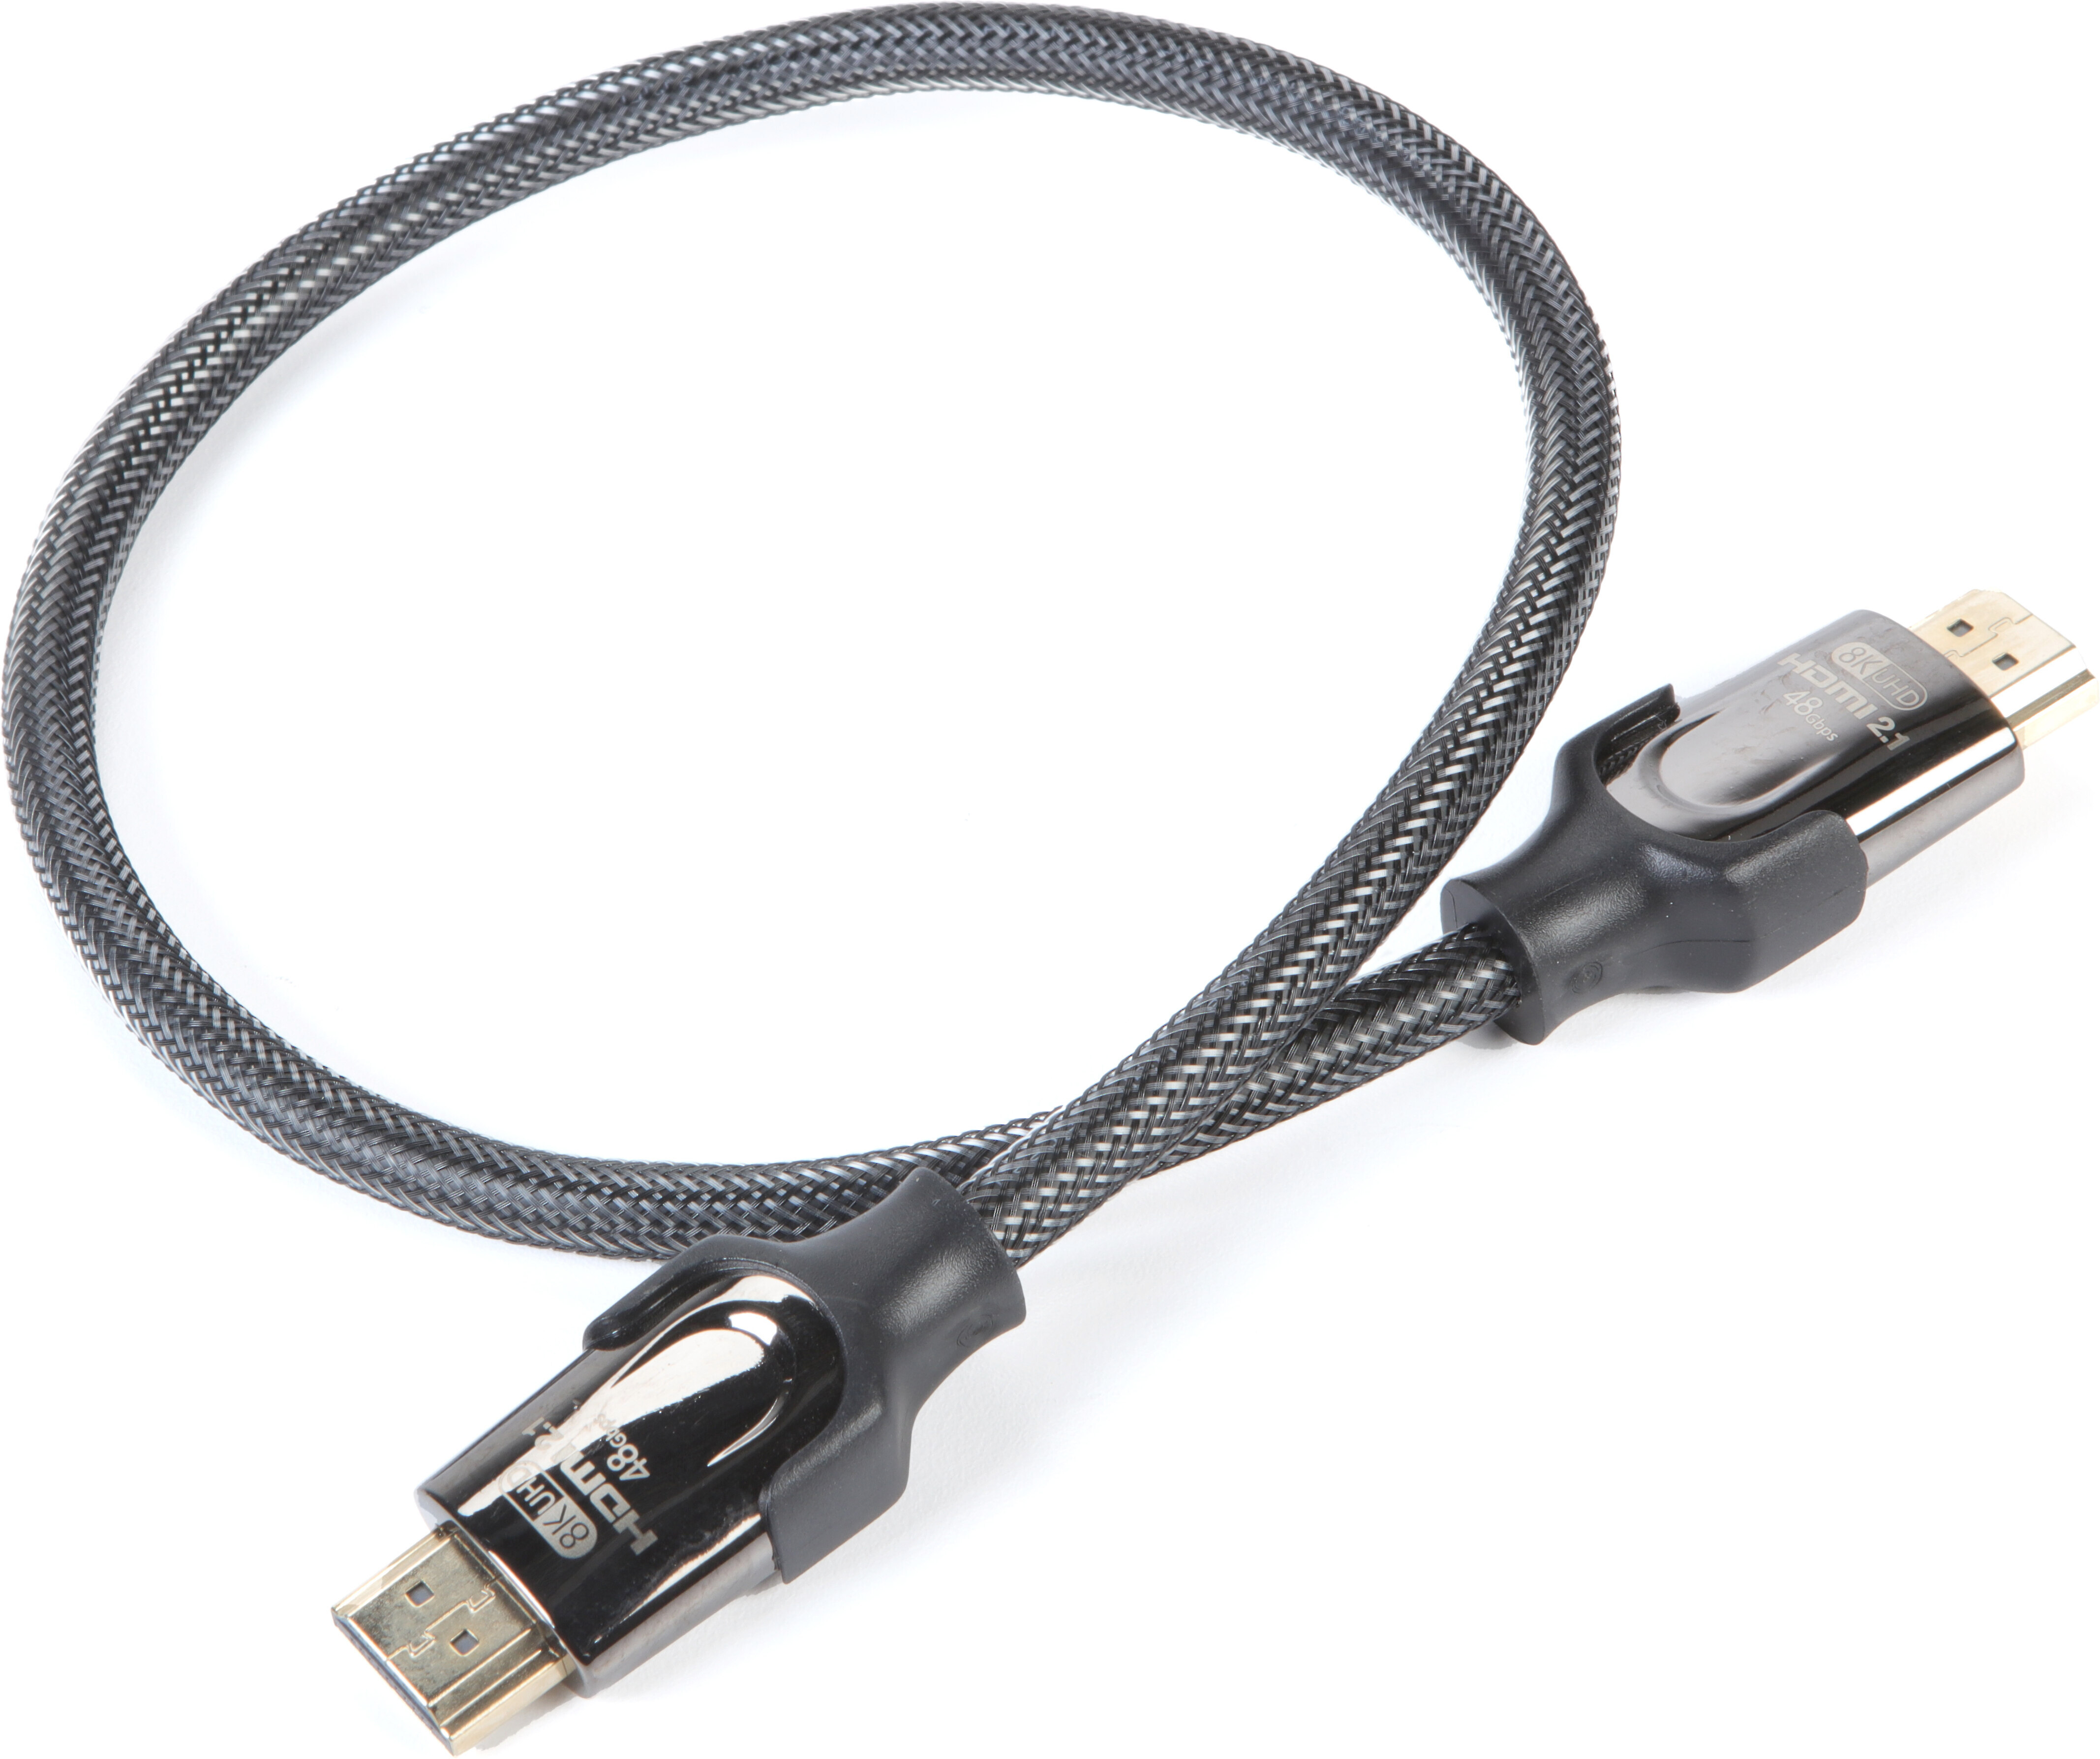 Cable HDMI-HDMI Funcion Ethernet - Versus Gamers